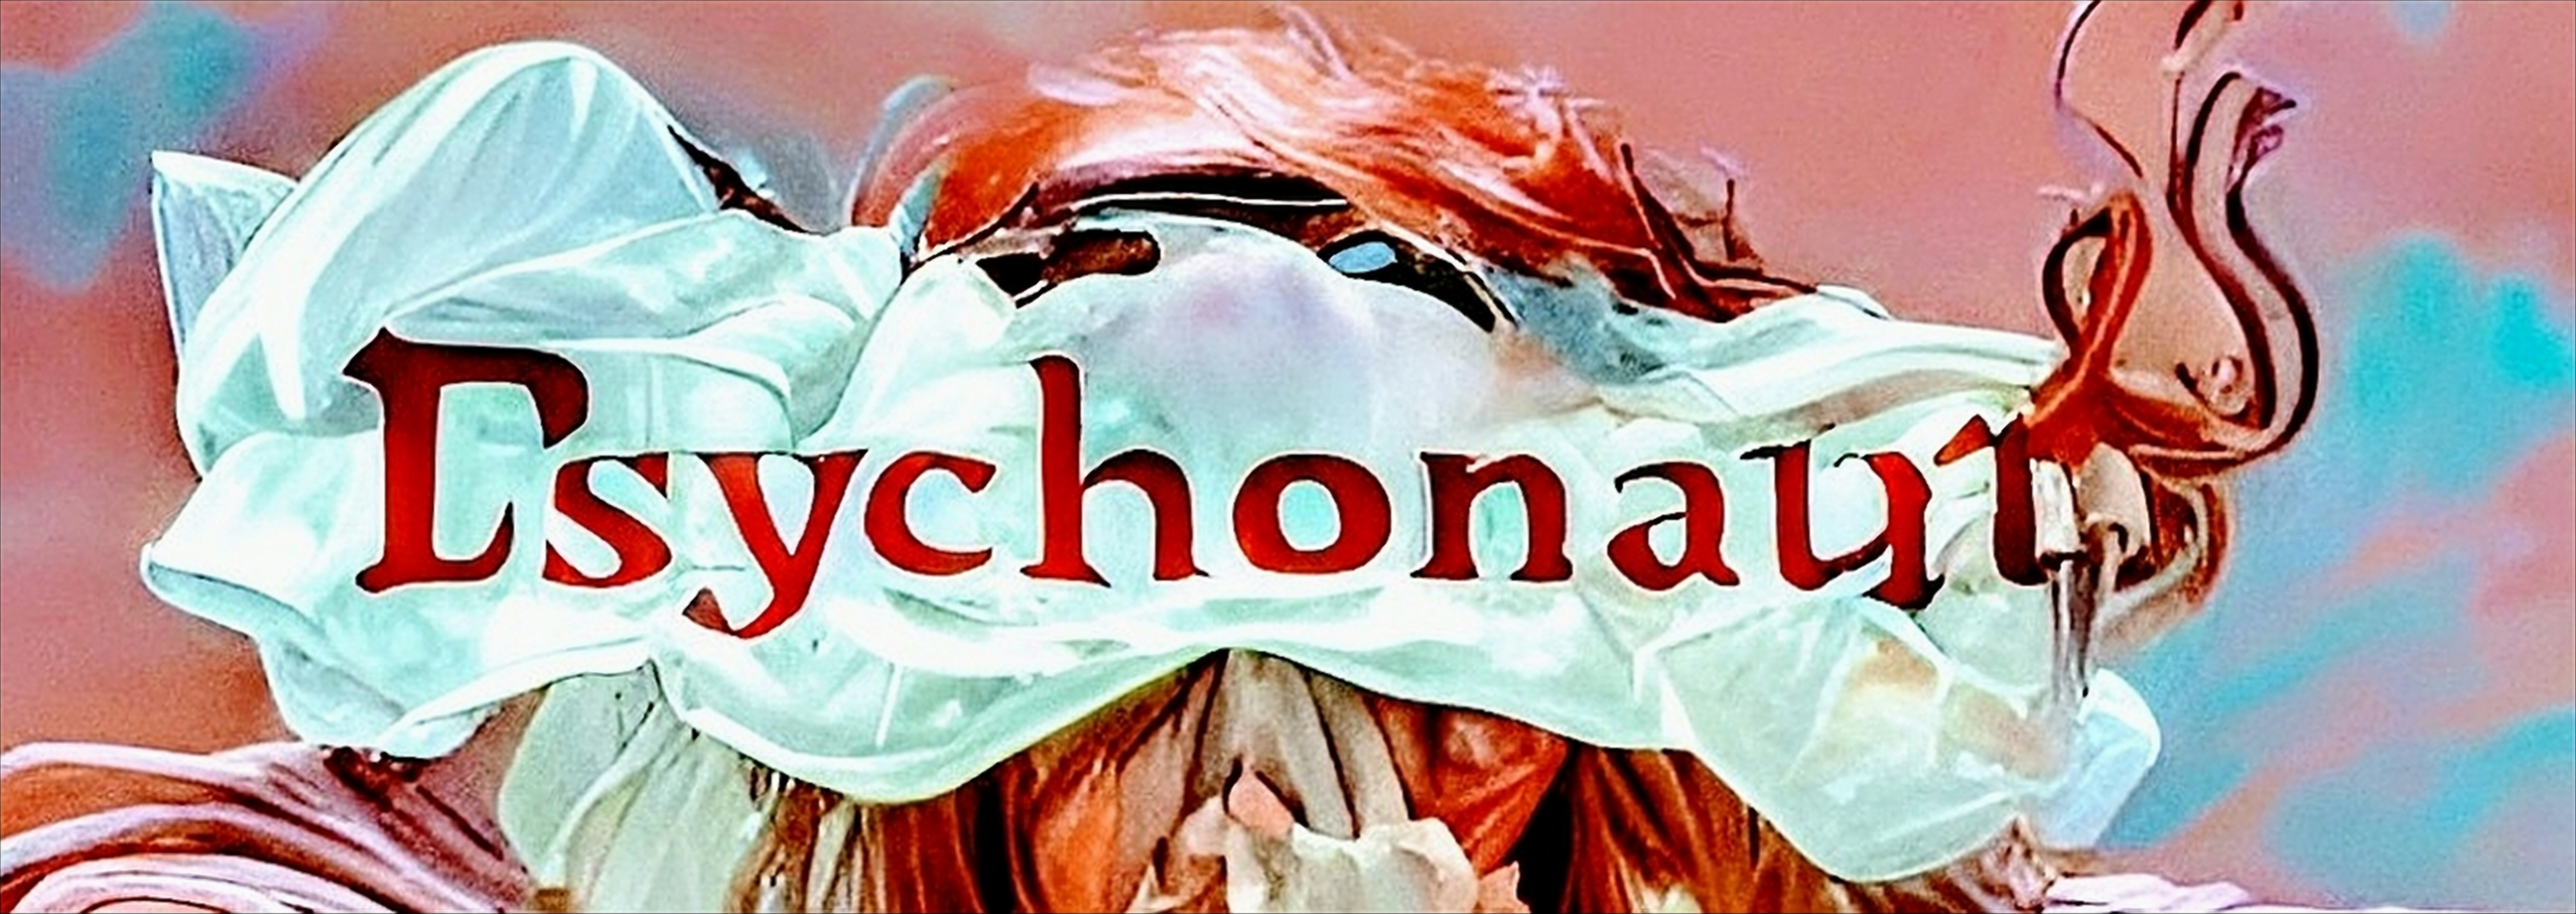 Psychonauts banner